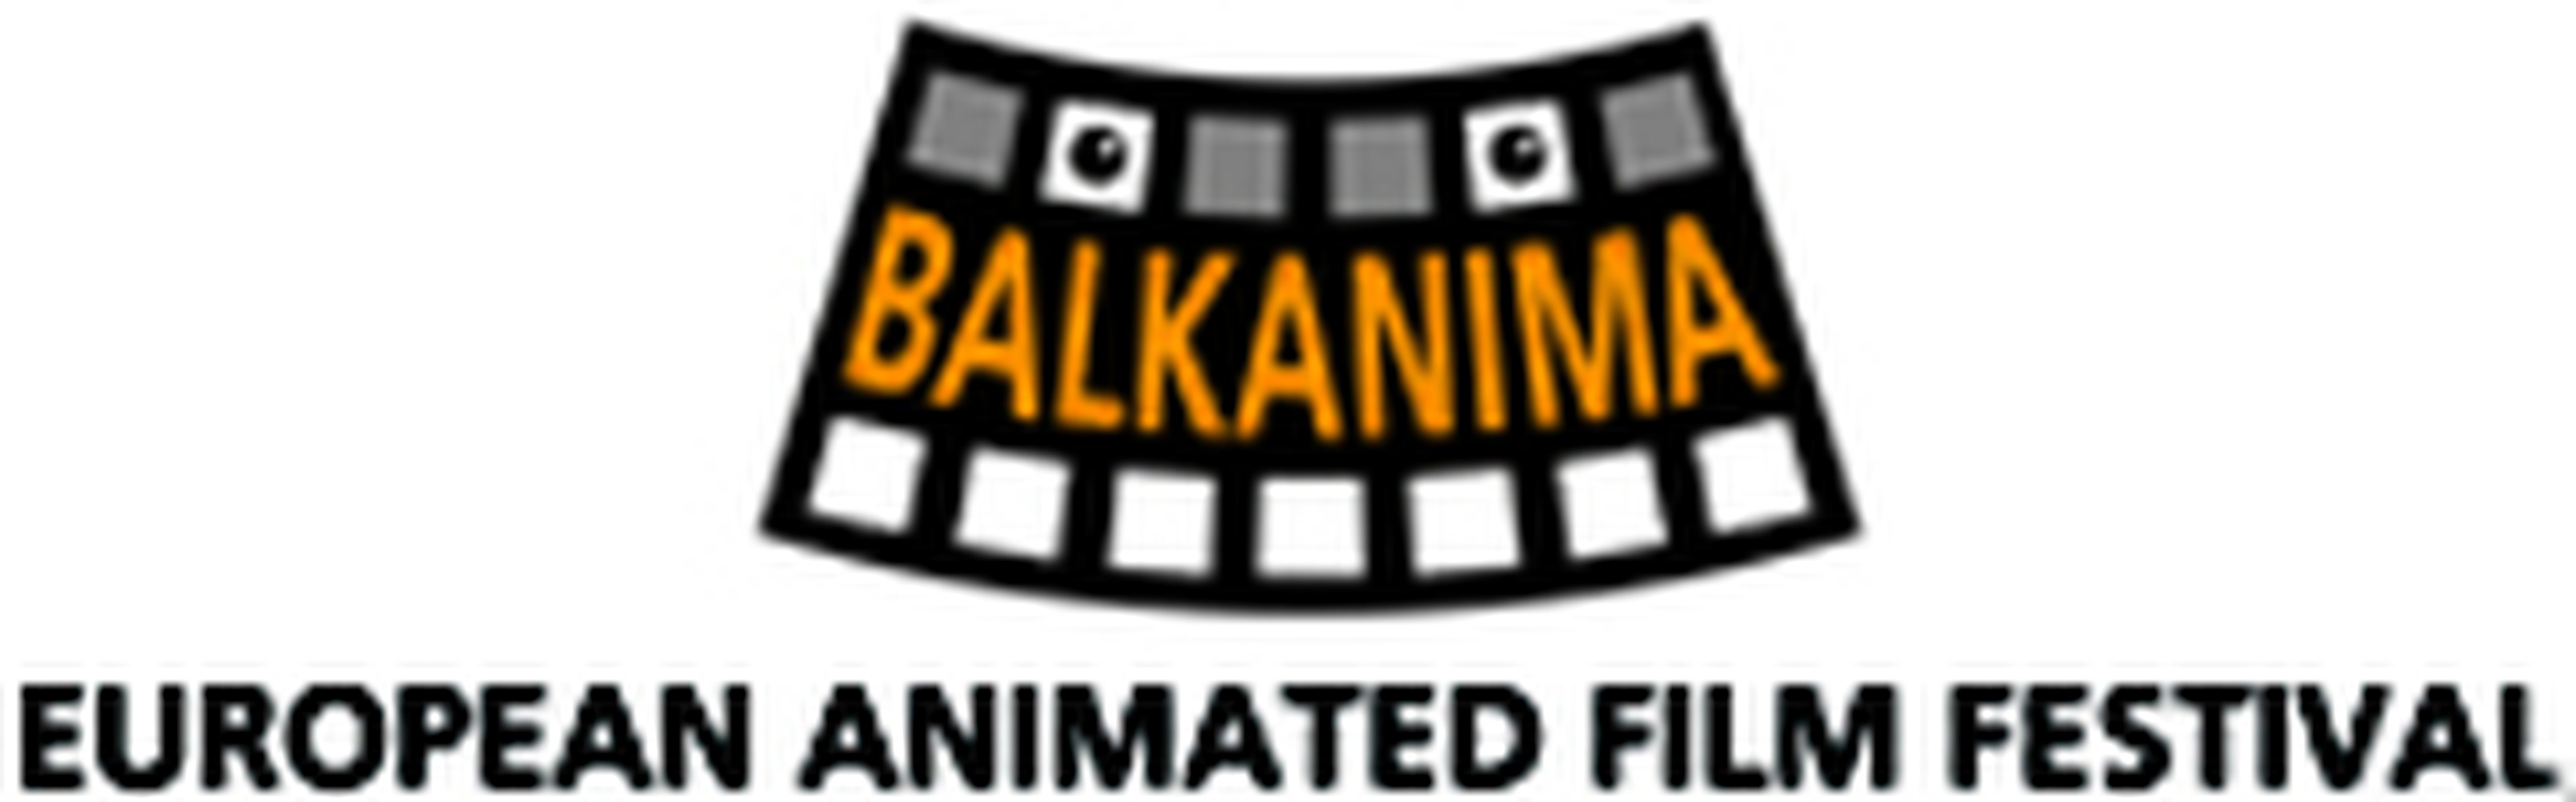 Balkanima European Animated Film Festival